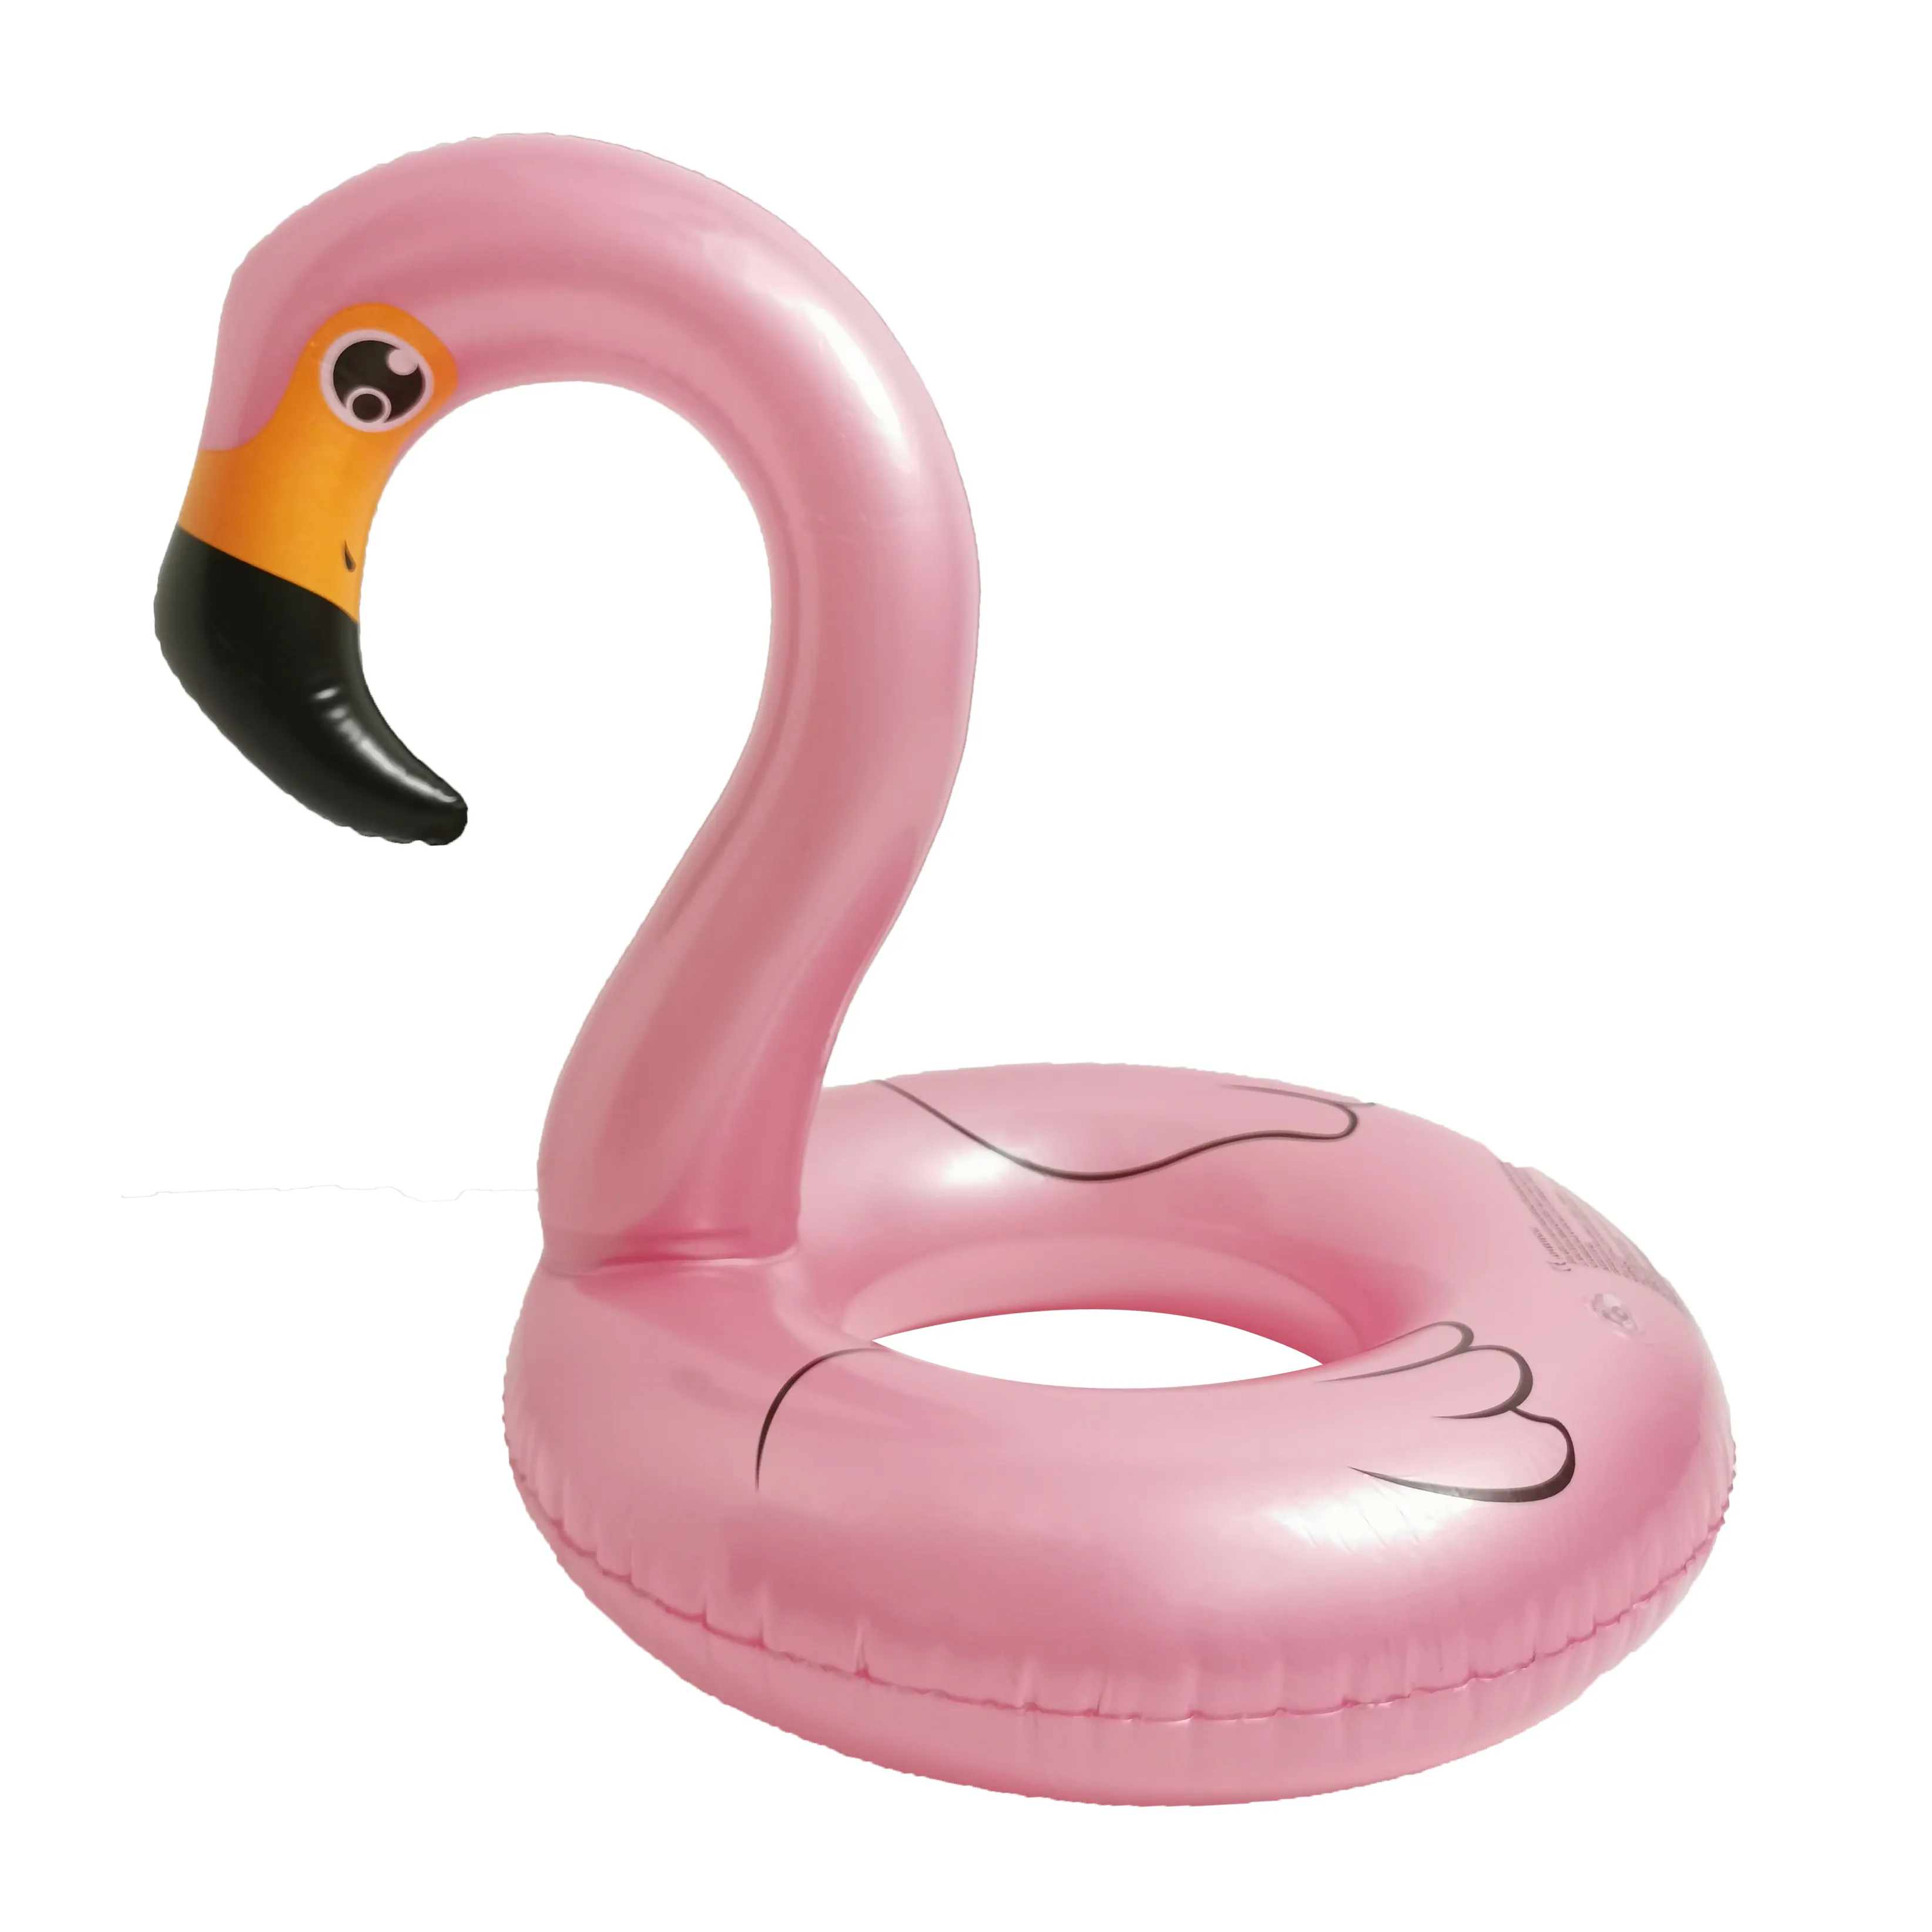 60 # gran piscina flotador juguetes Rosa inflable flamenco piscina flotador anillo de natación para niños diversión de verano, decoraciones de fiestas de piscina de verano